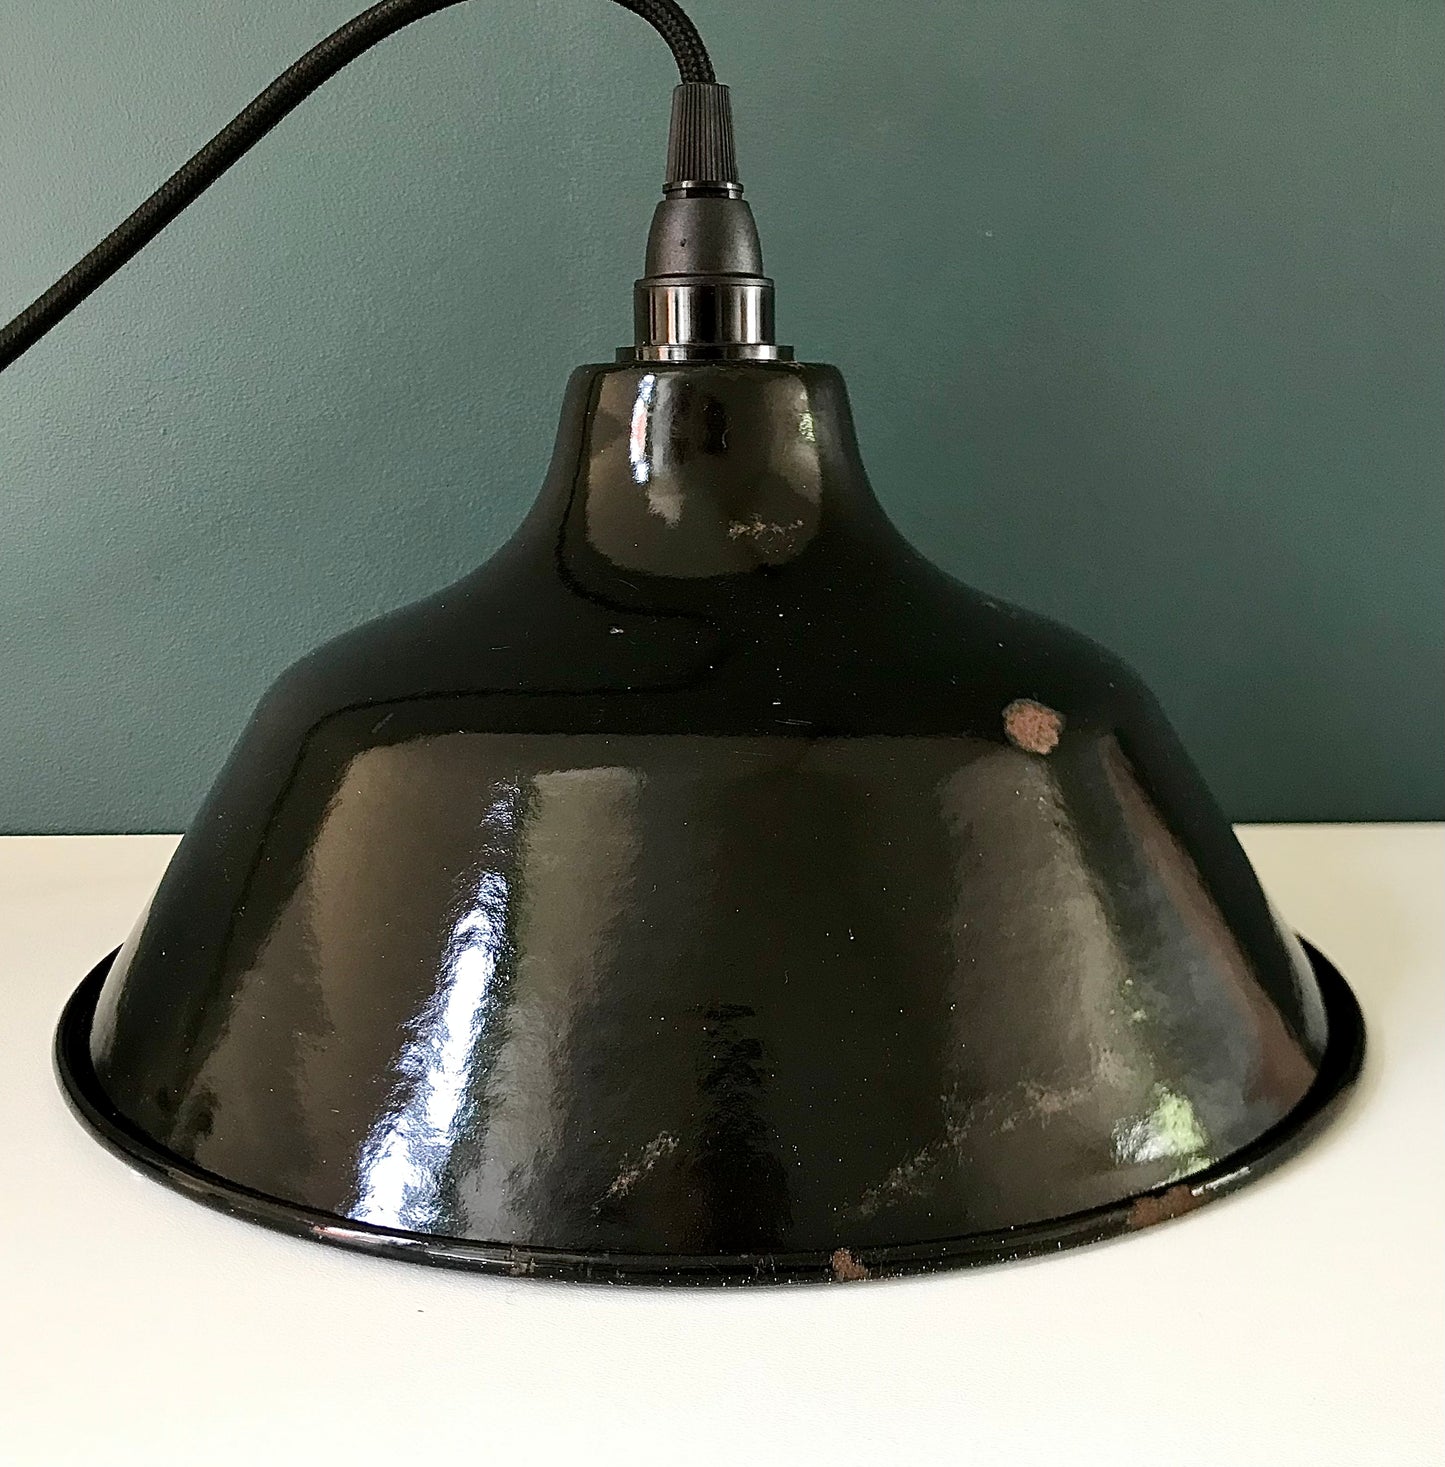 Vintage Danish Black Enamel Pendant Workshop Ceiling Lamp Industrial Design